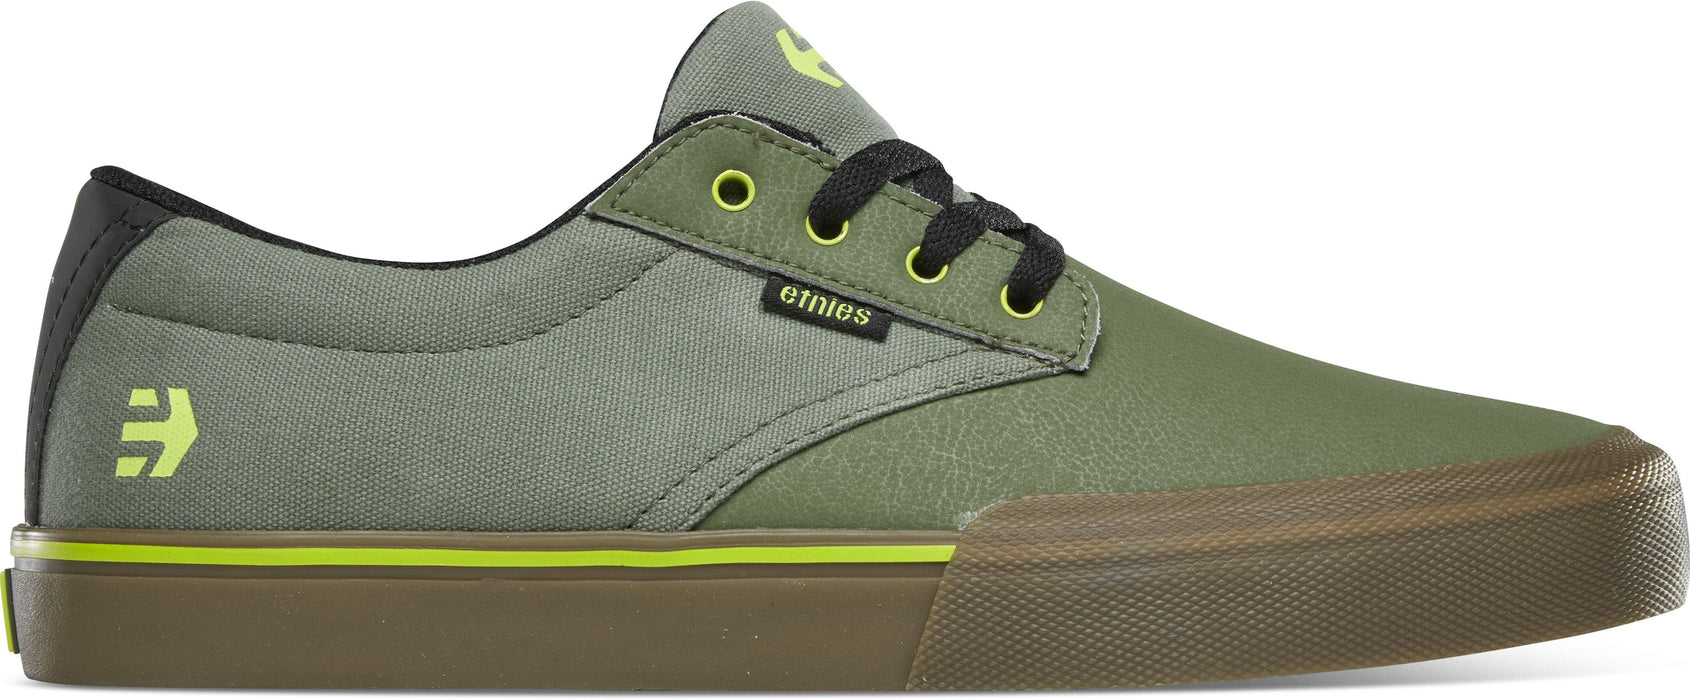 Etnies Clothing & Shoes Etnies Jameson Vulc BMX Tom Dugan Shoes Green / Gum